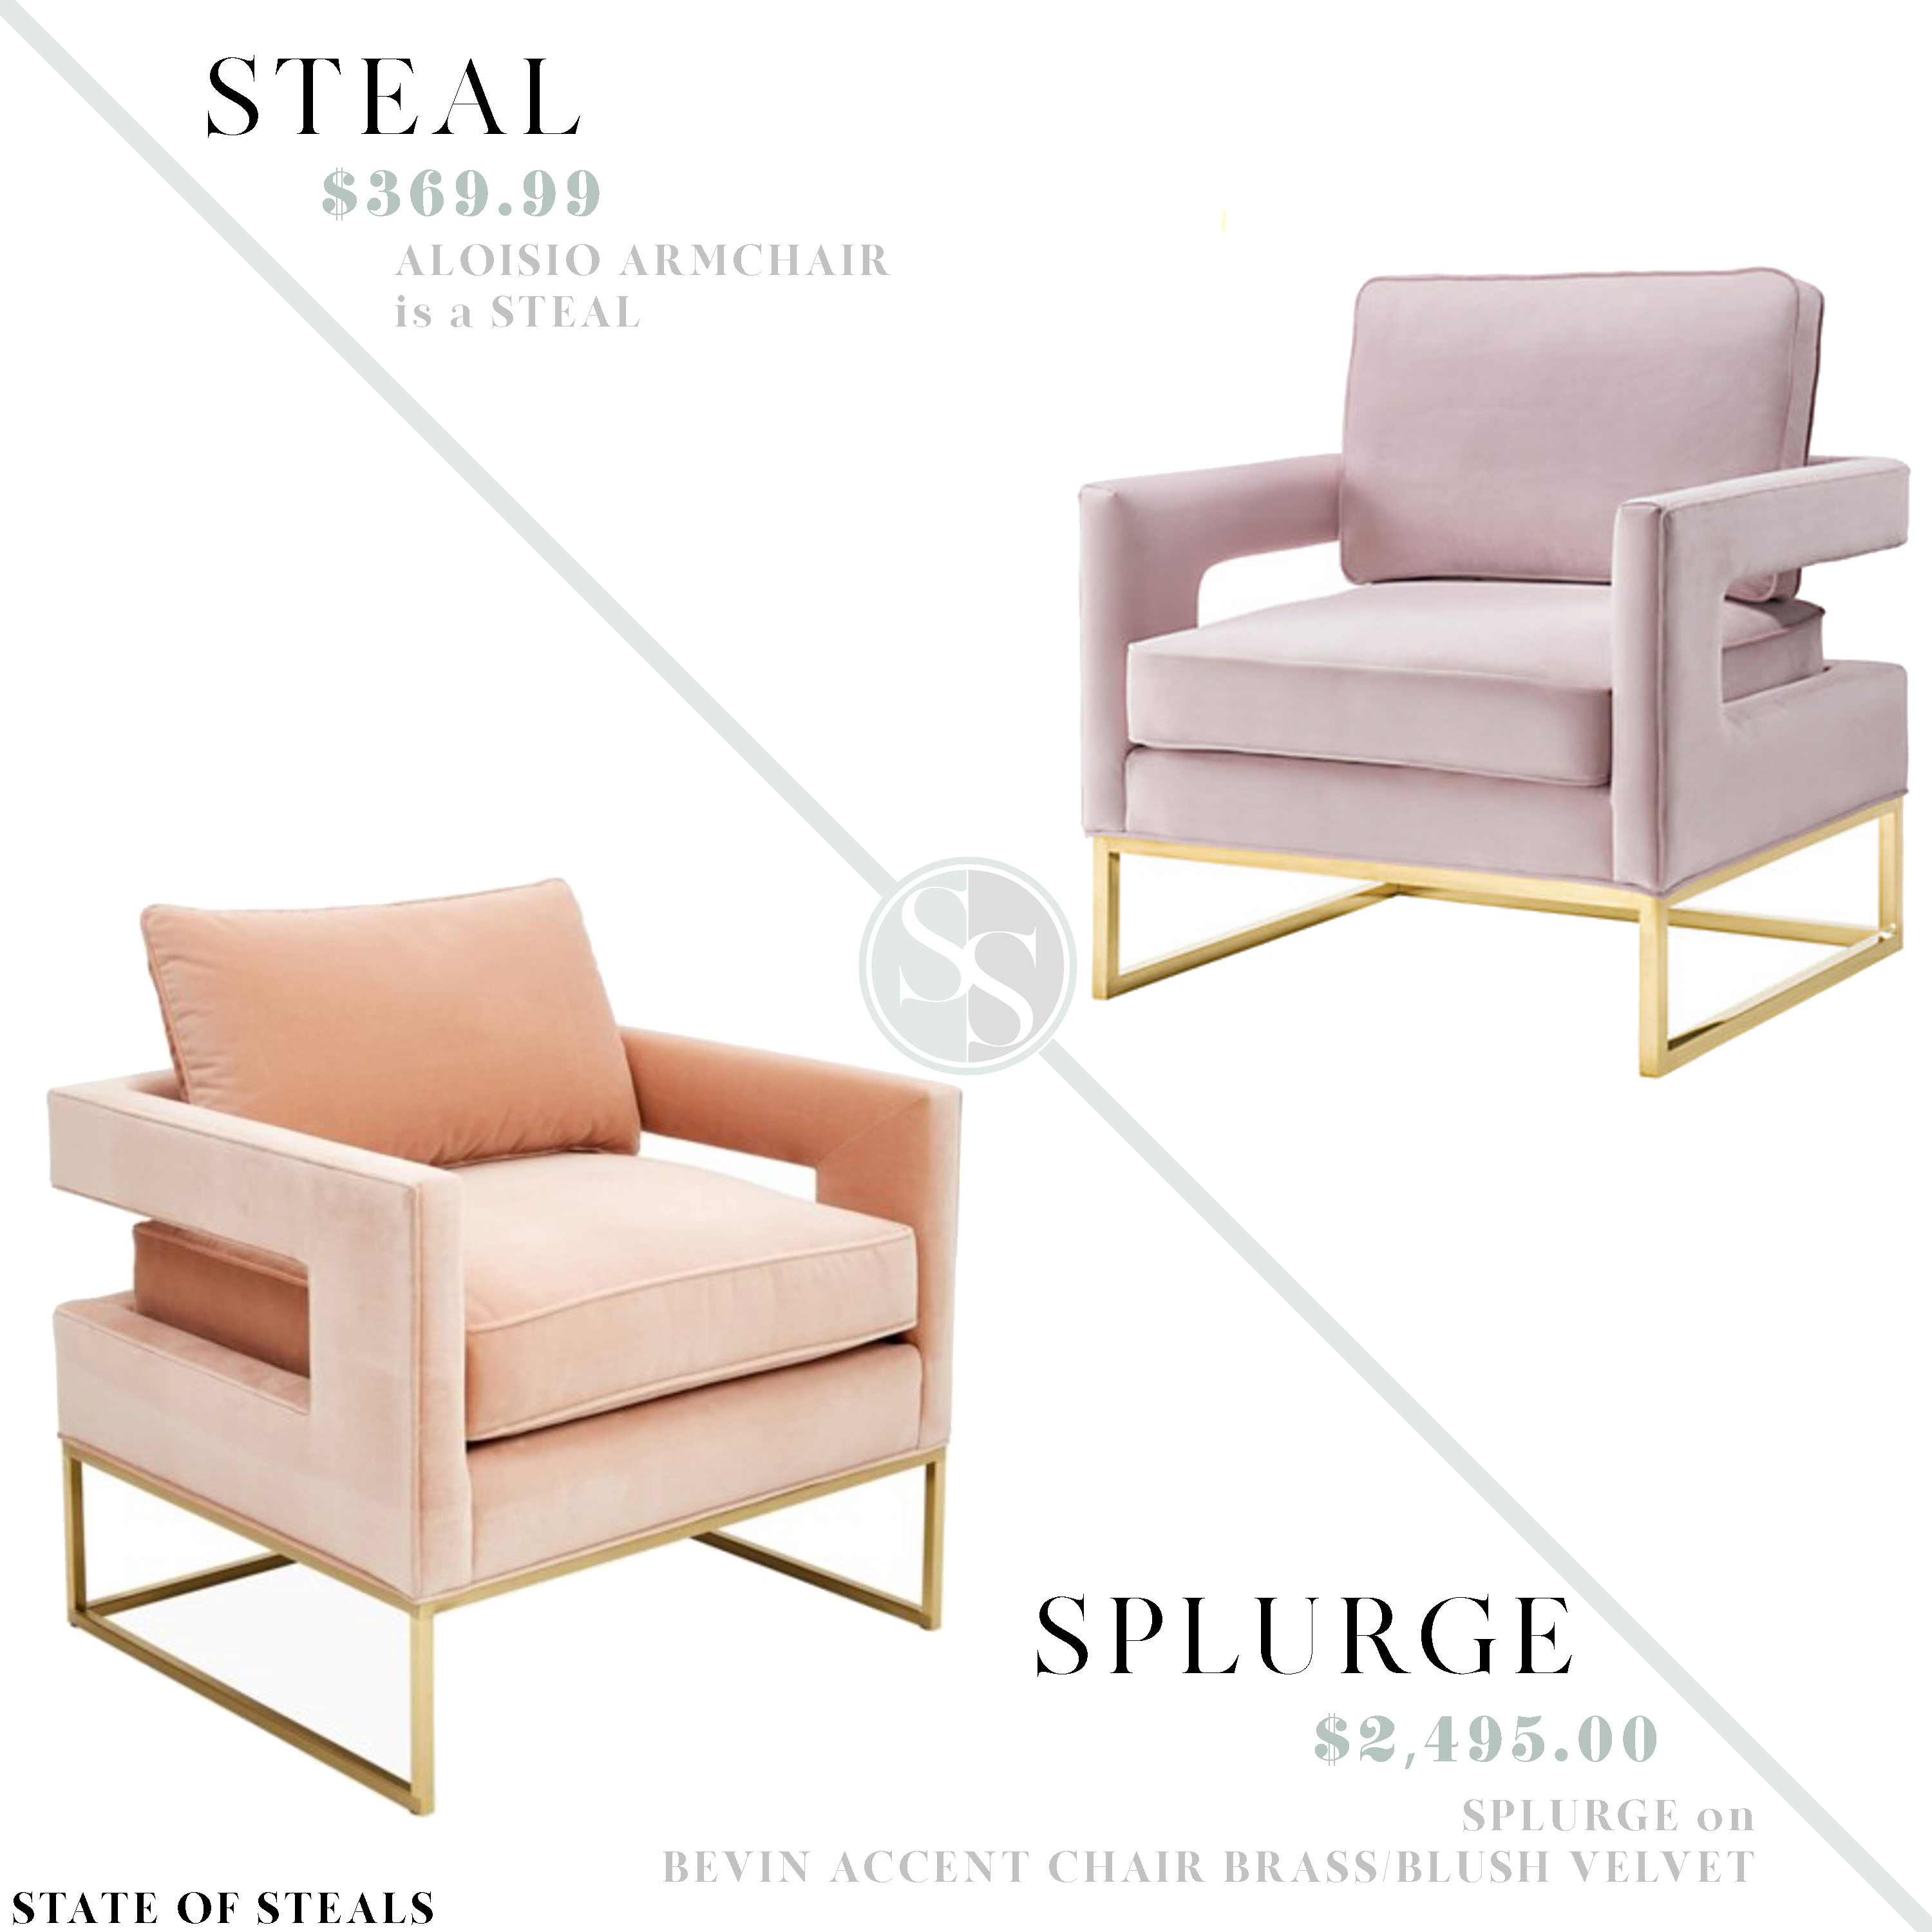 Blush Velvet Chair - State of Steals